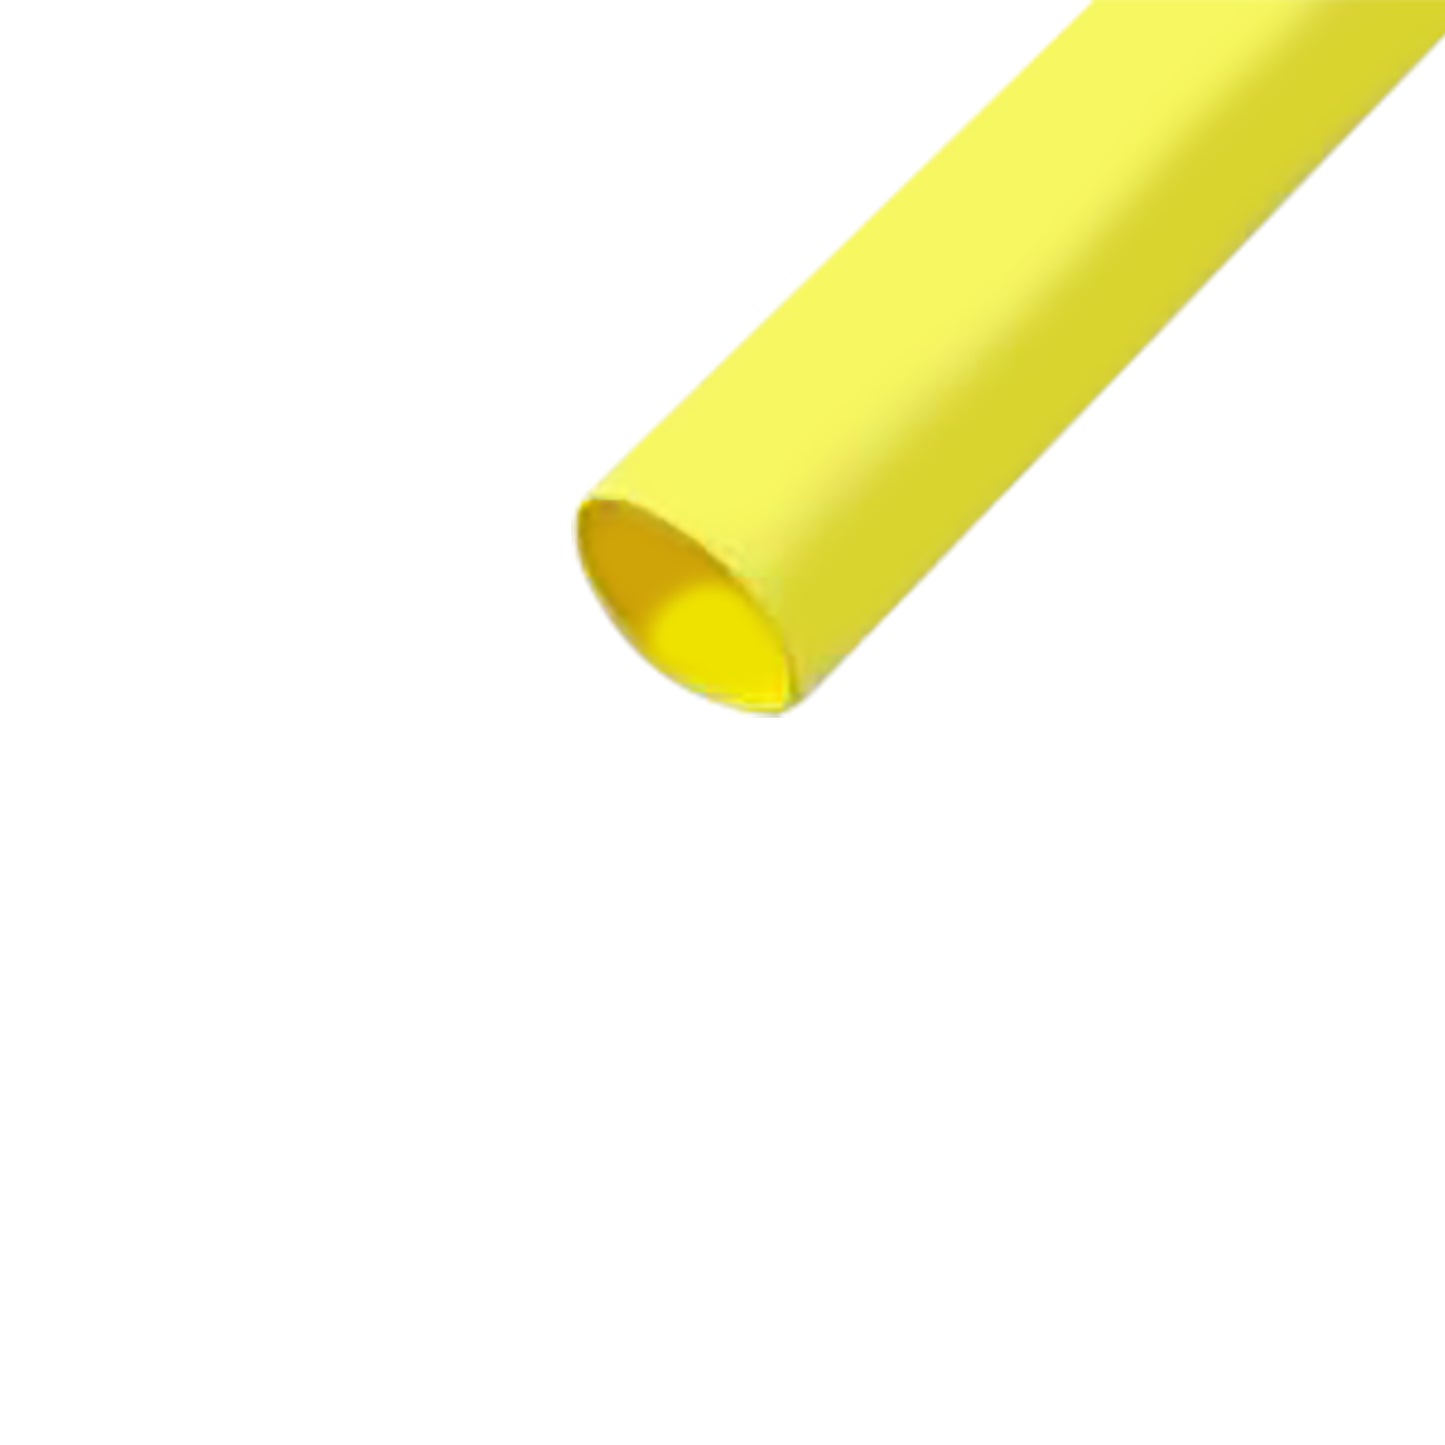 Flexible Thin Single Wall Non-Adhesive Heat Shrink Tubing 2:1 Yellow 1" ID - 50' Ft Spool